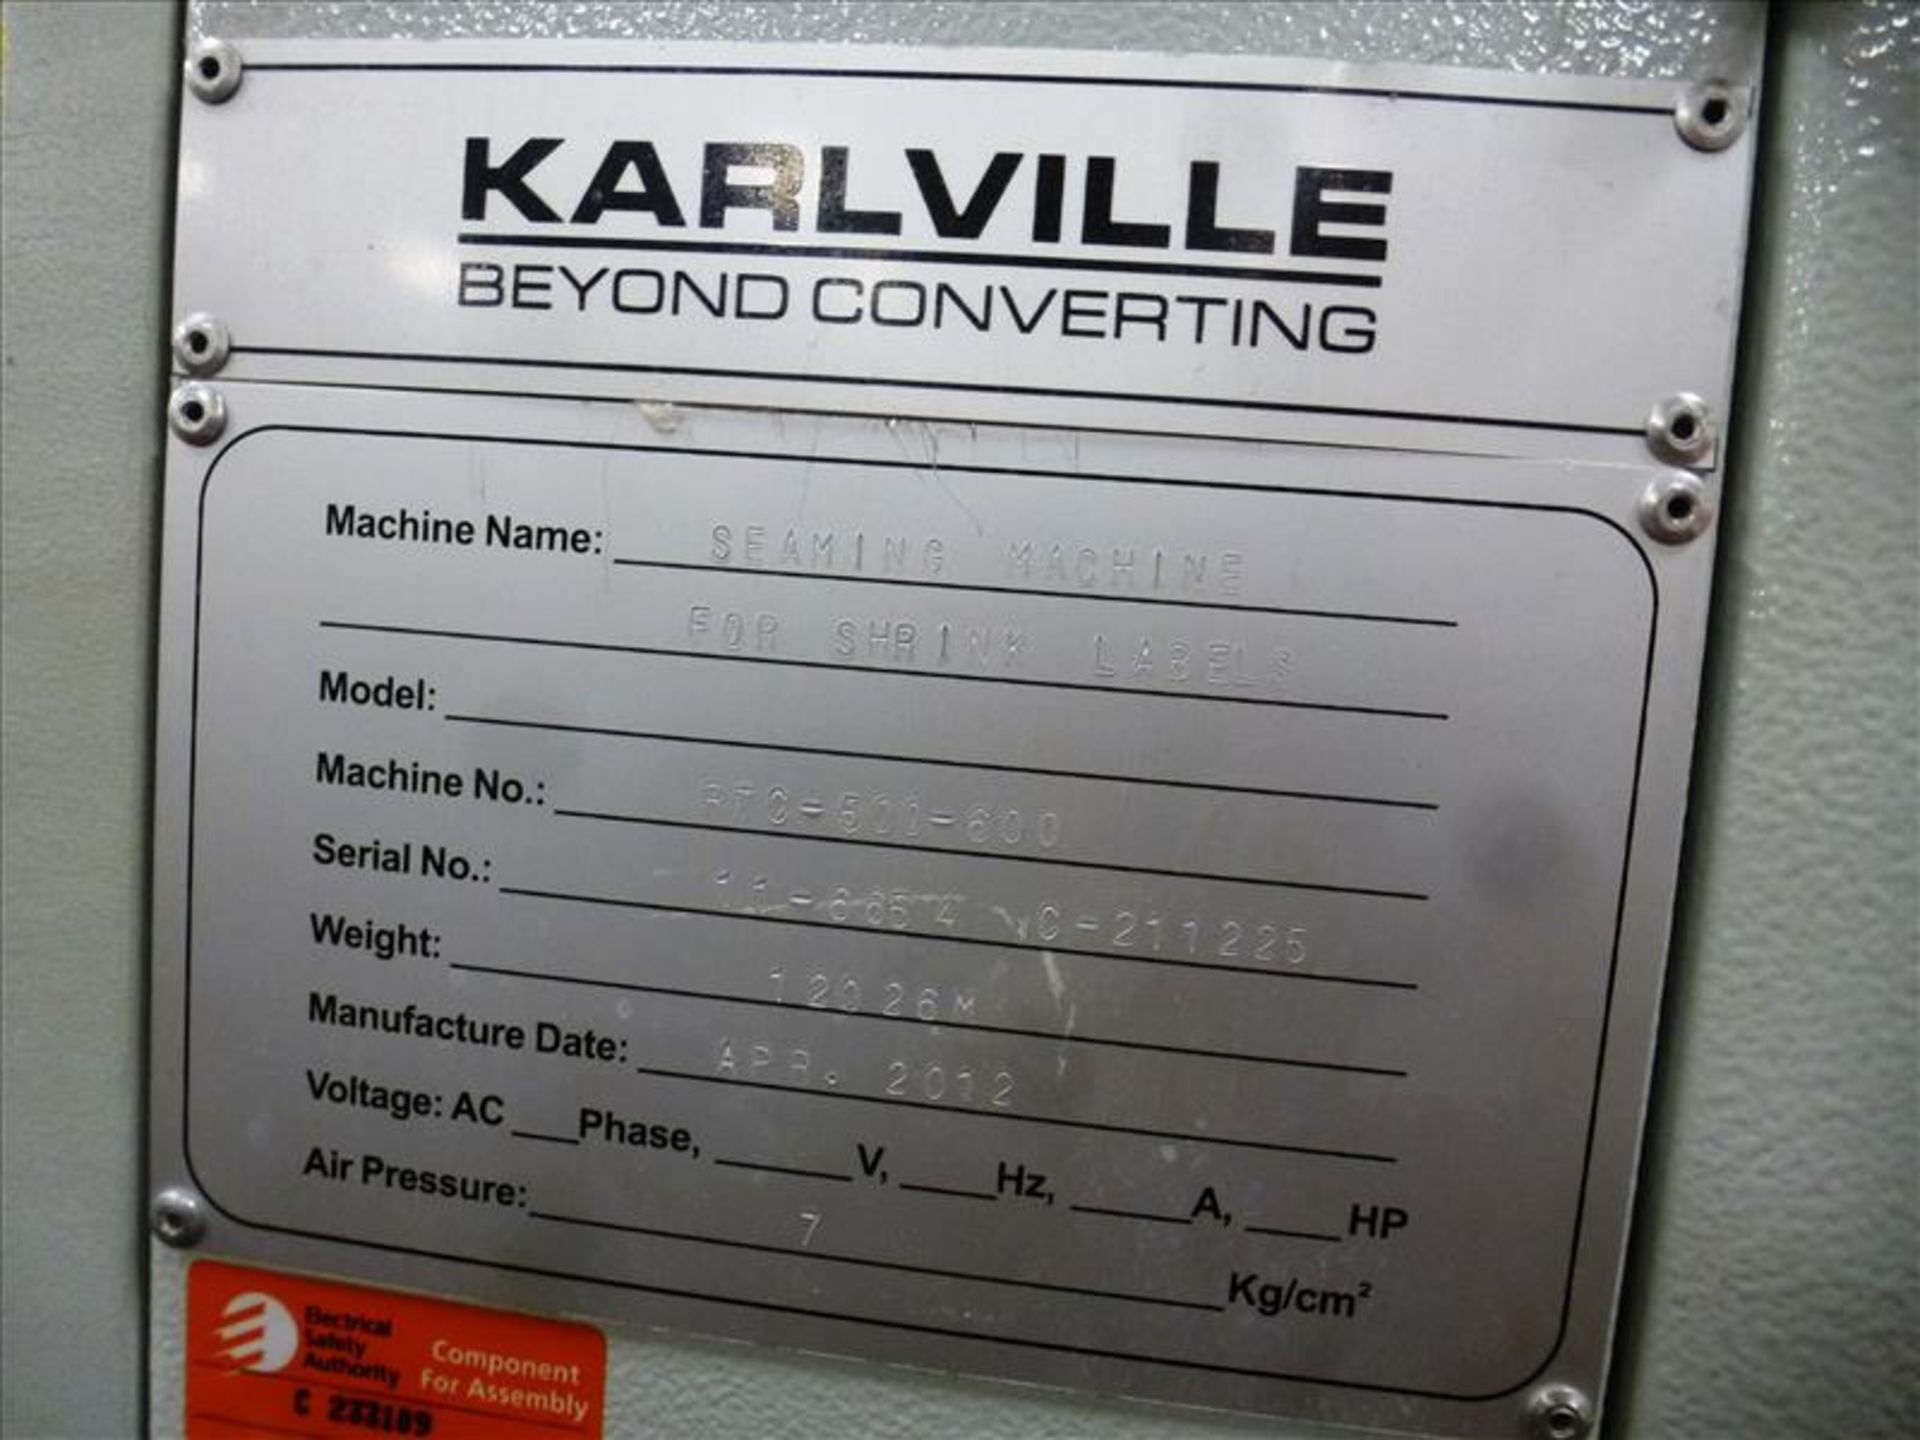 2012 Karlville K4 shrink label seaming machine, model SEAM-350D-UHS, machine no. 11-6654 C-211225, - Image 7 of 7